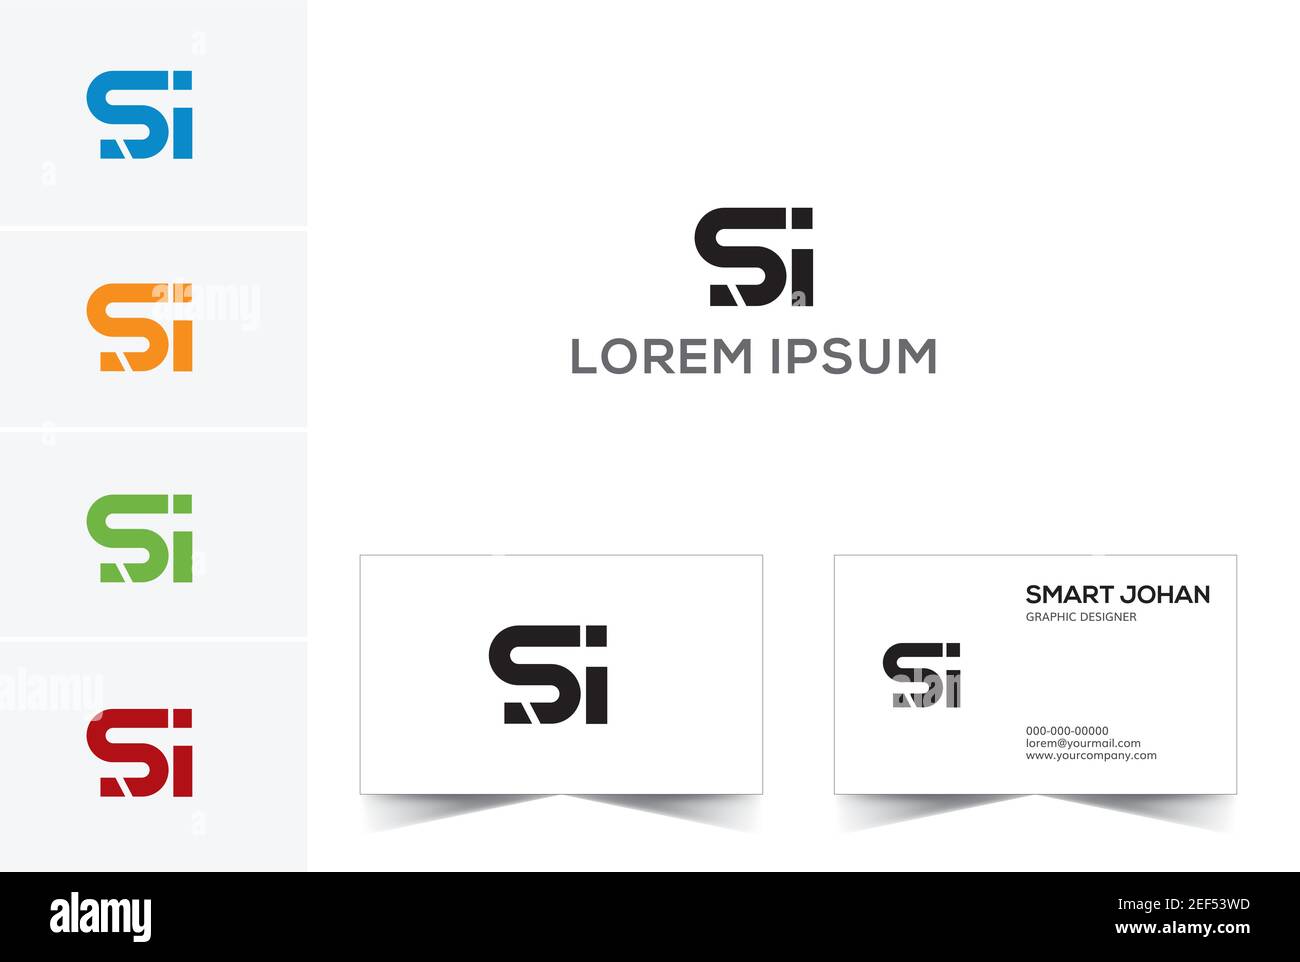 Si logo and icon Stock Vector